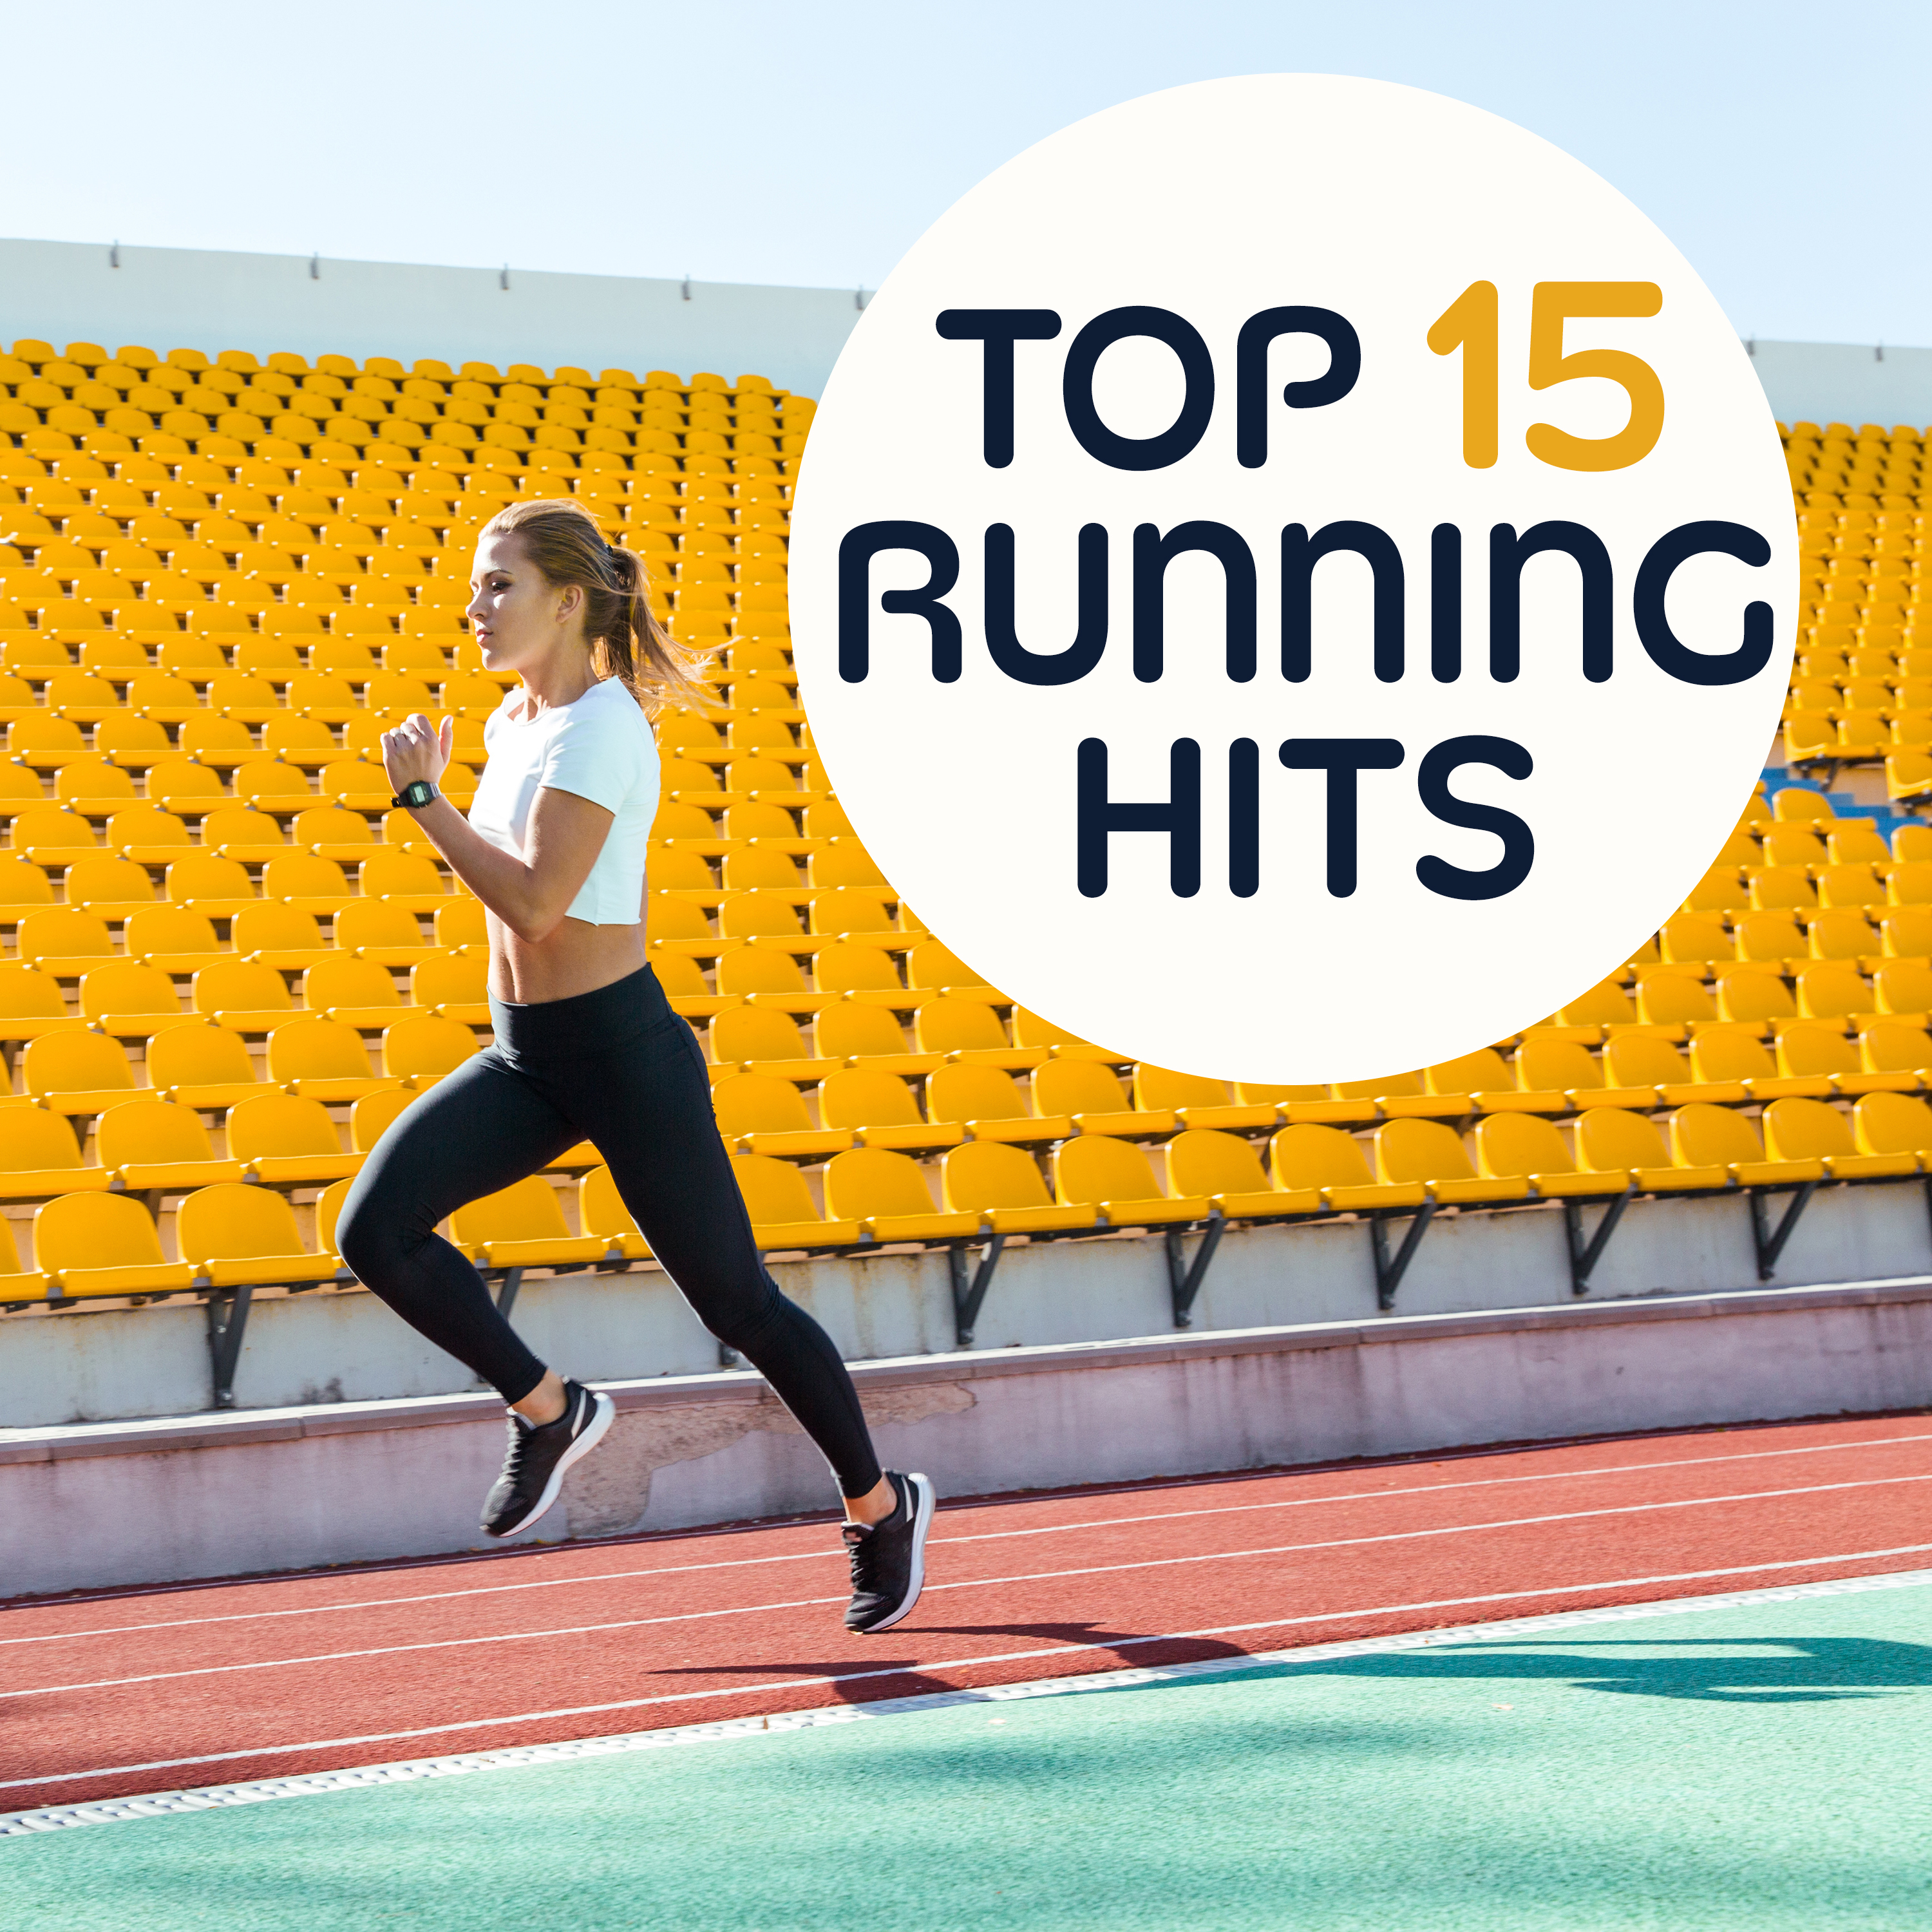 Top 15 Running Hits